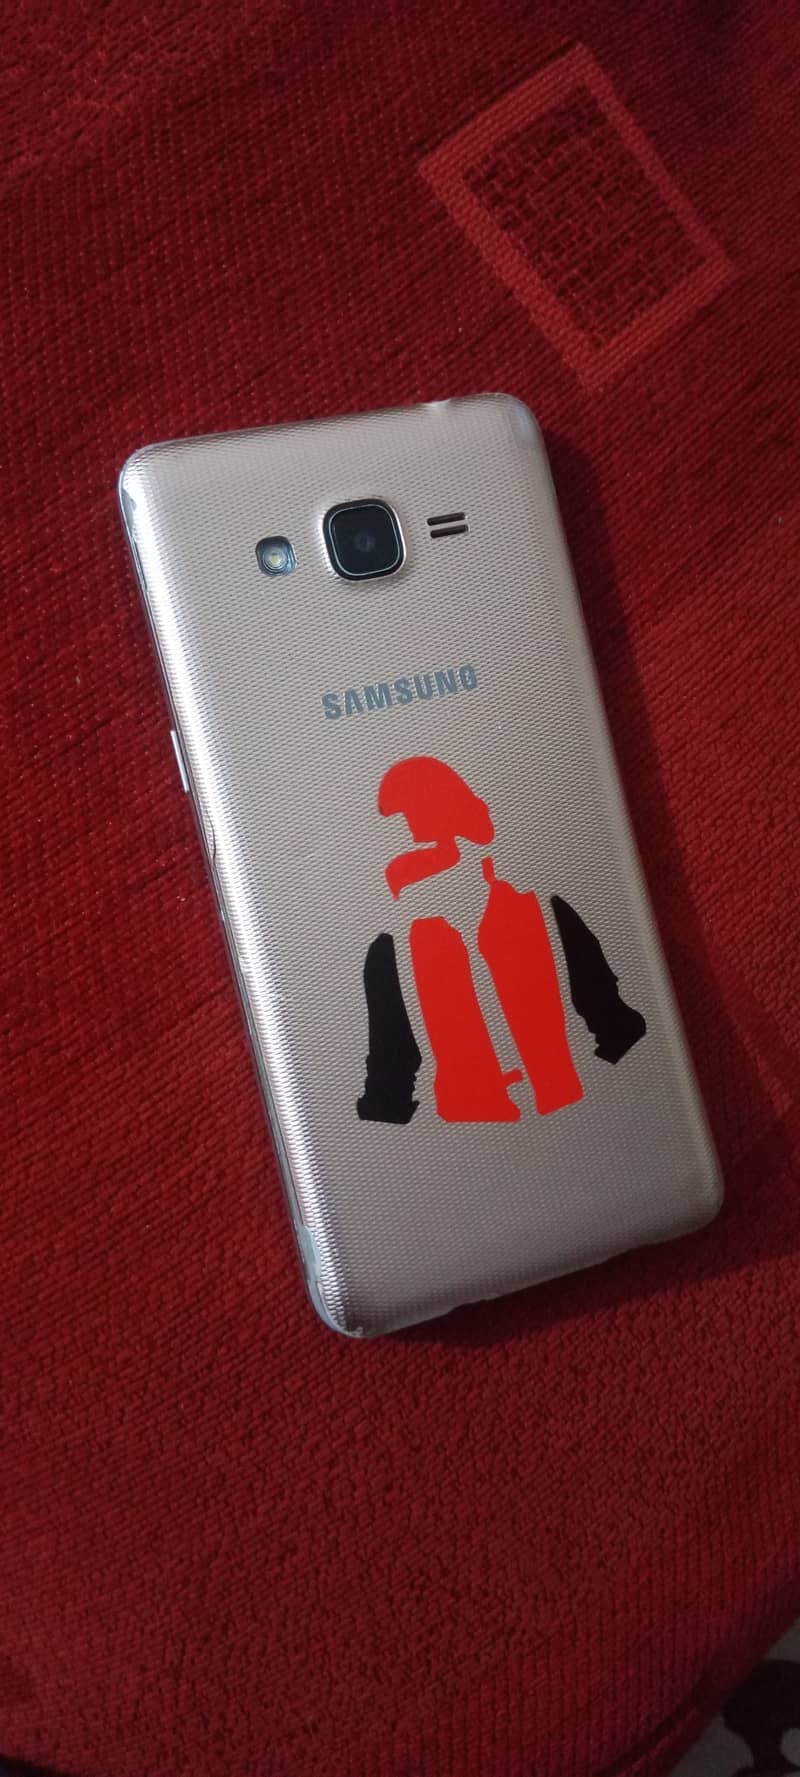 Samsung galaxy grand prime plus mobile phone. 4